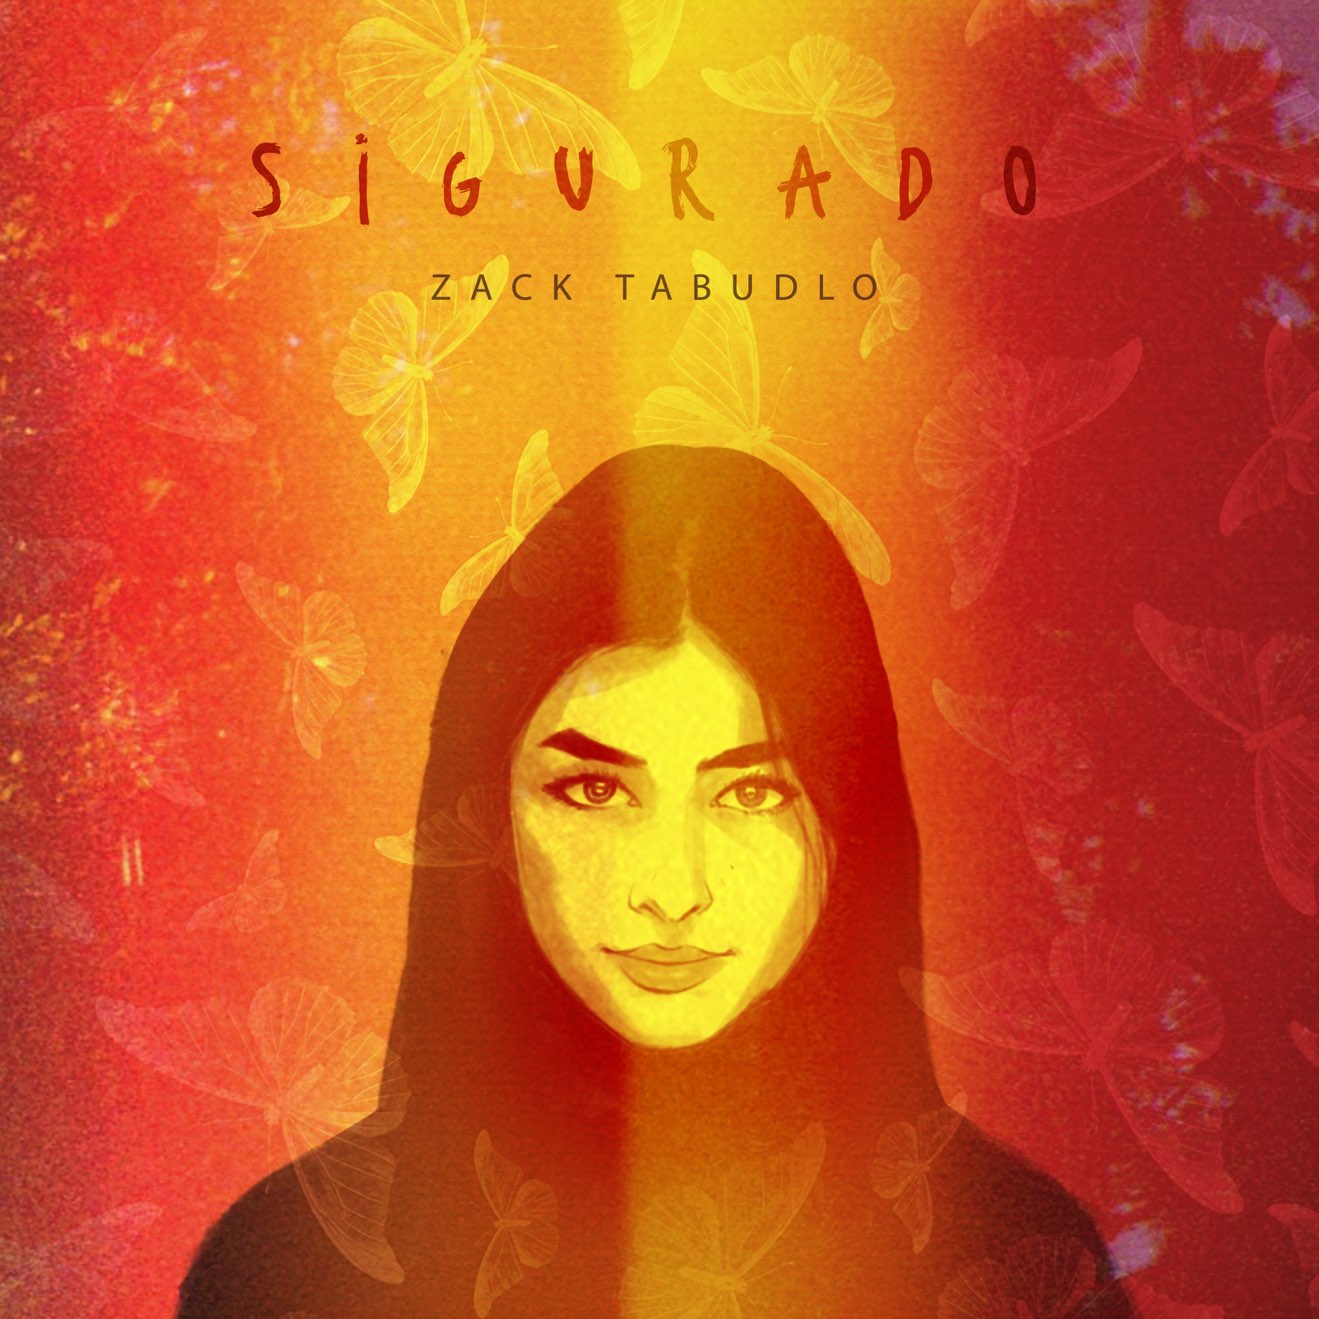 Zack Tabudlo – Sigurado – Single (2020) [iTunes Match M4A]